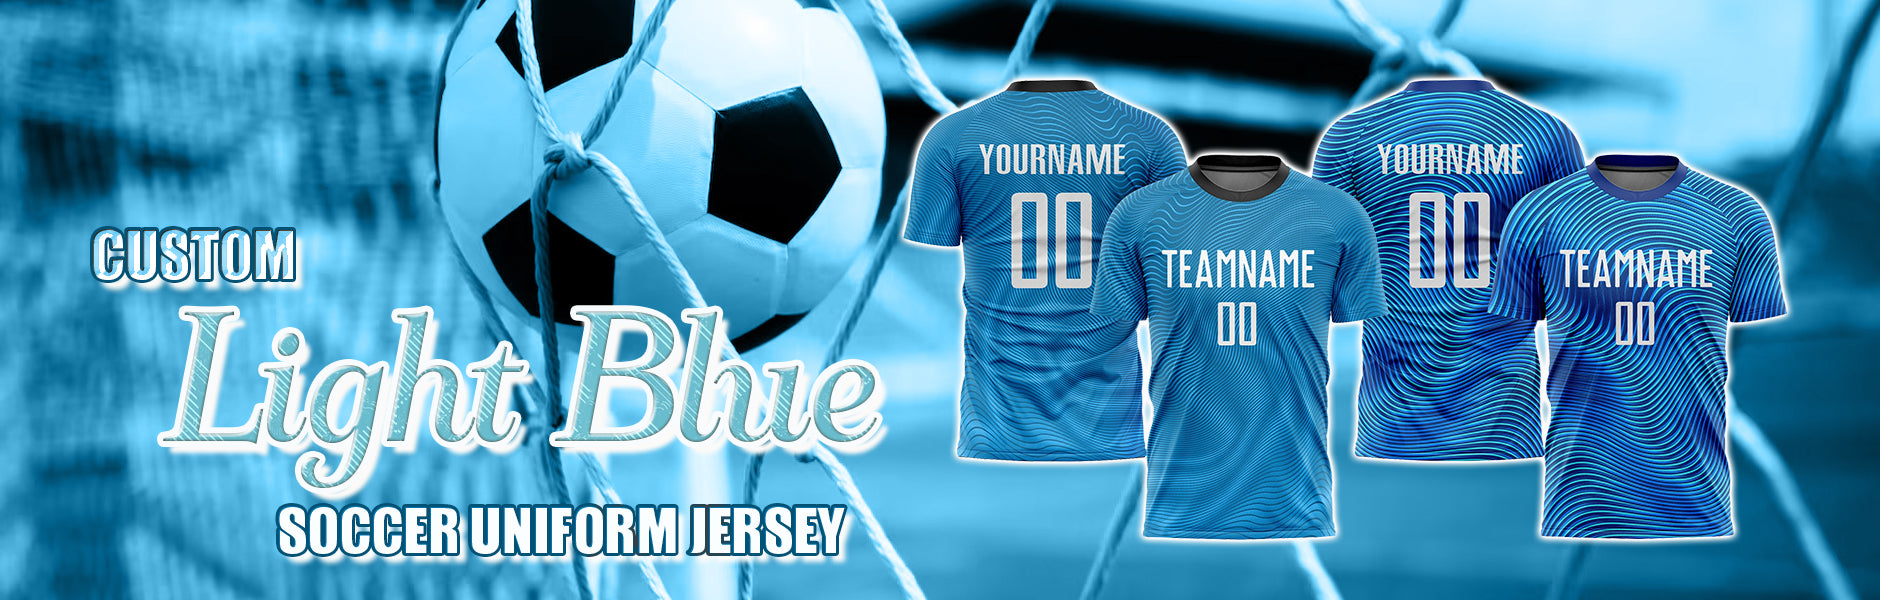 custom soccer light blue jersey